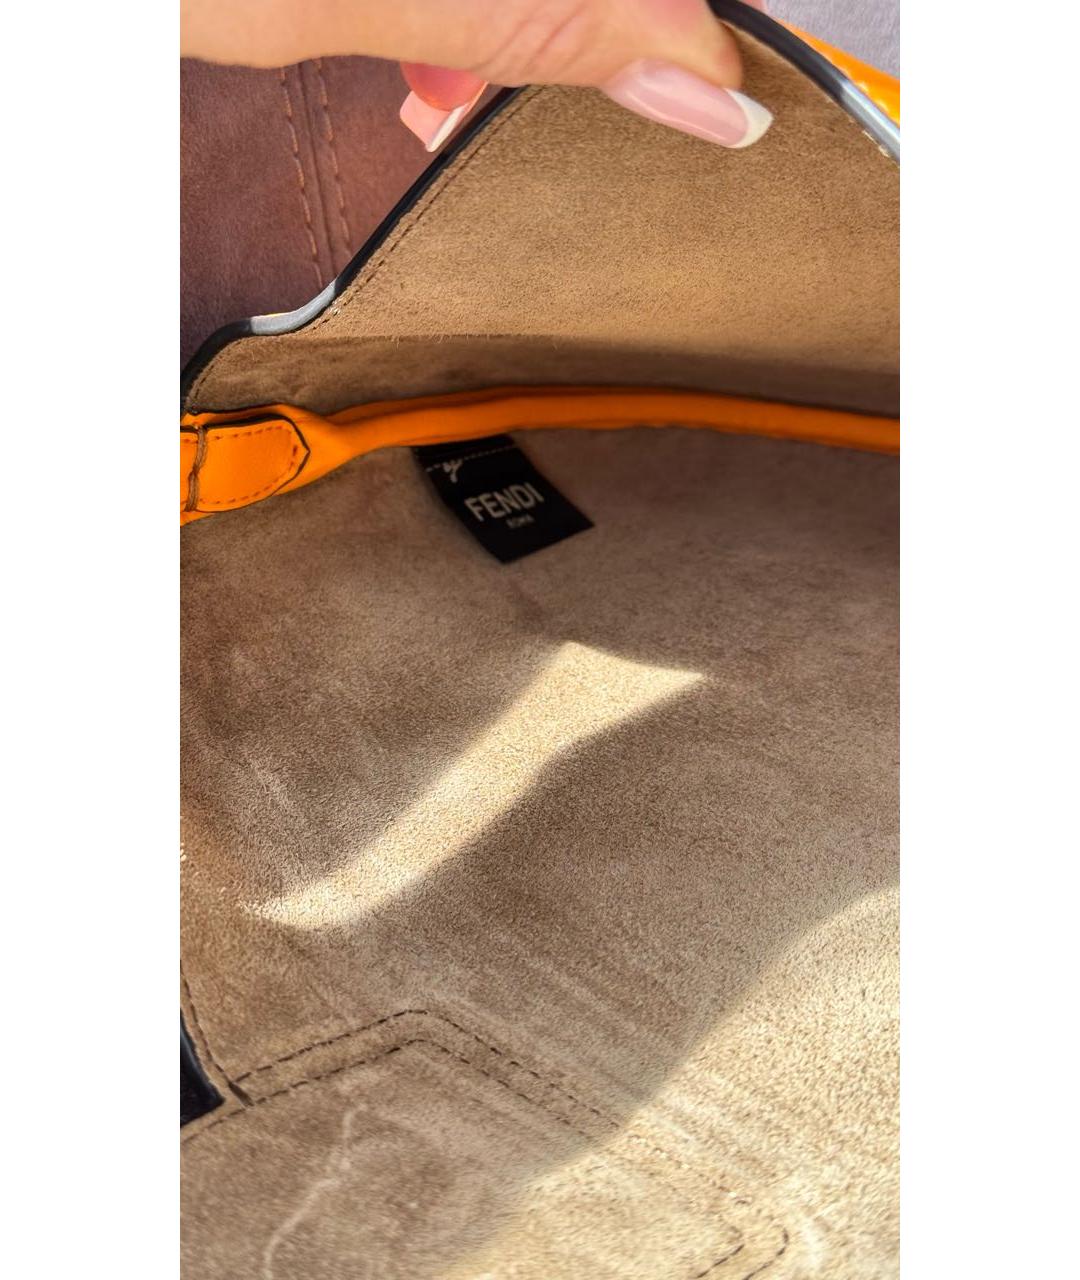 FENDI Оранжевая кожаная сумка с короткими ручками, фото 5